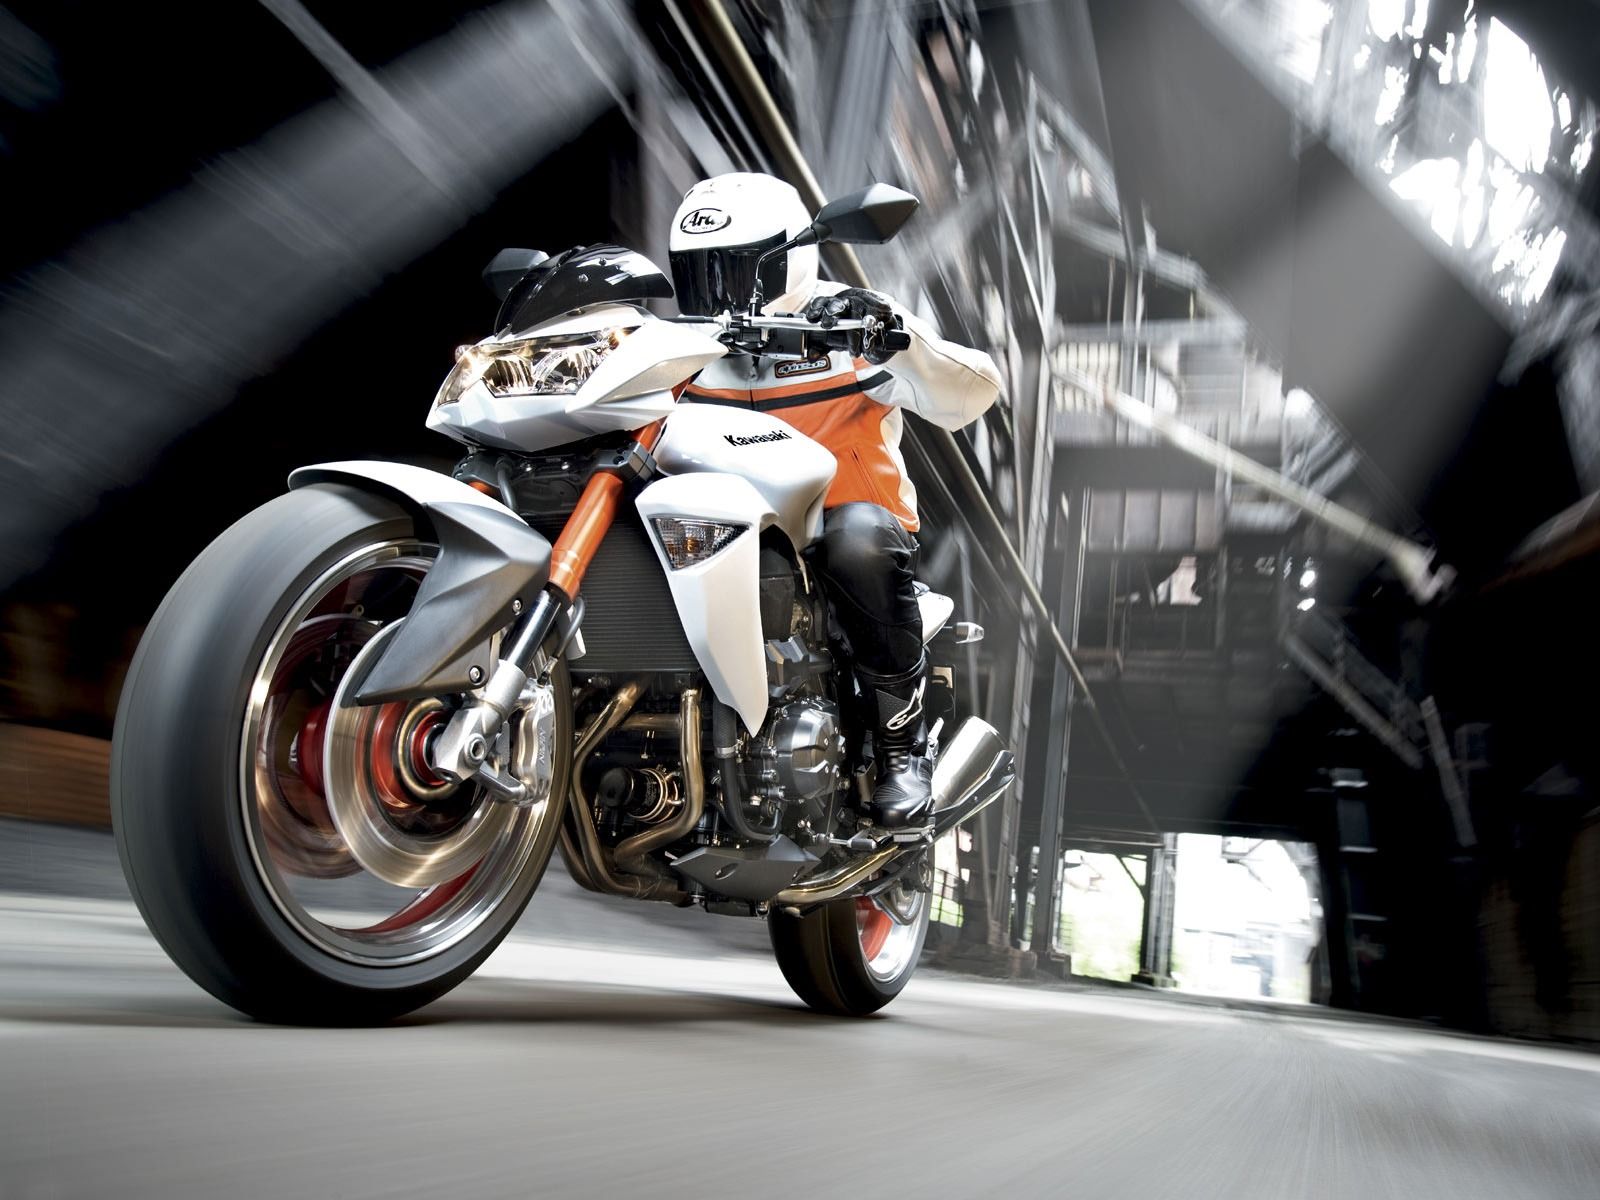 Kawasaki Z1000 Wallpaper Kawasaki Motorcycles Fondos de pantalla en jpg